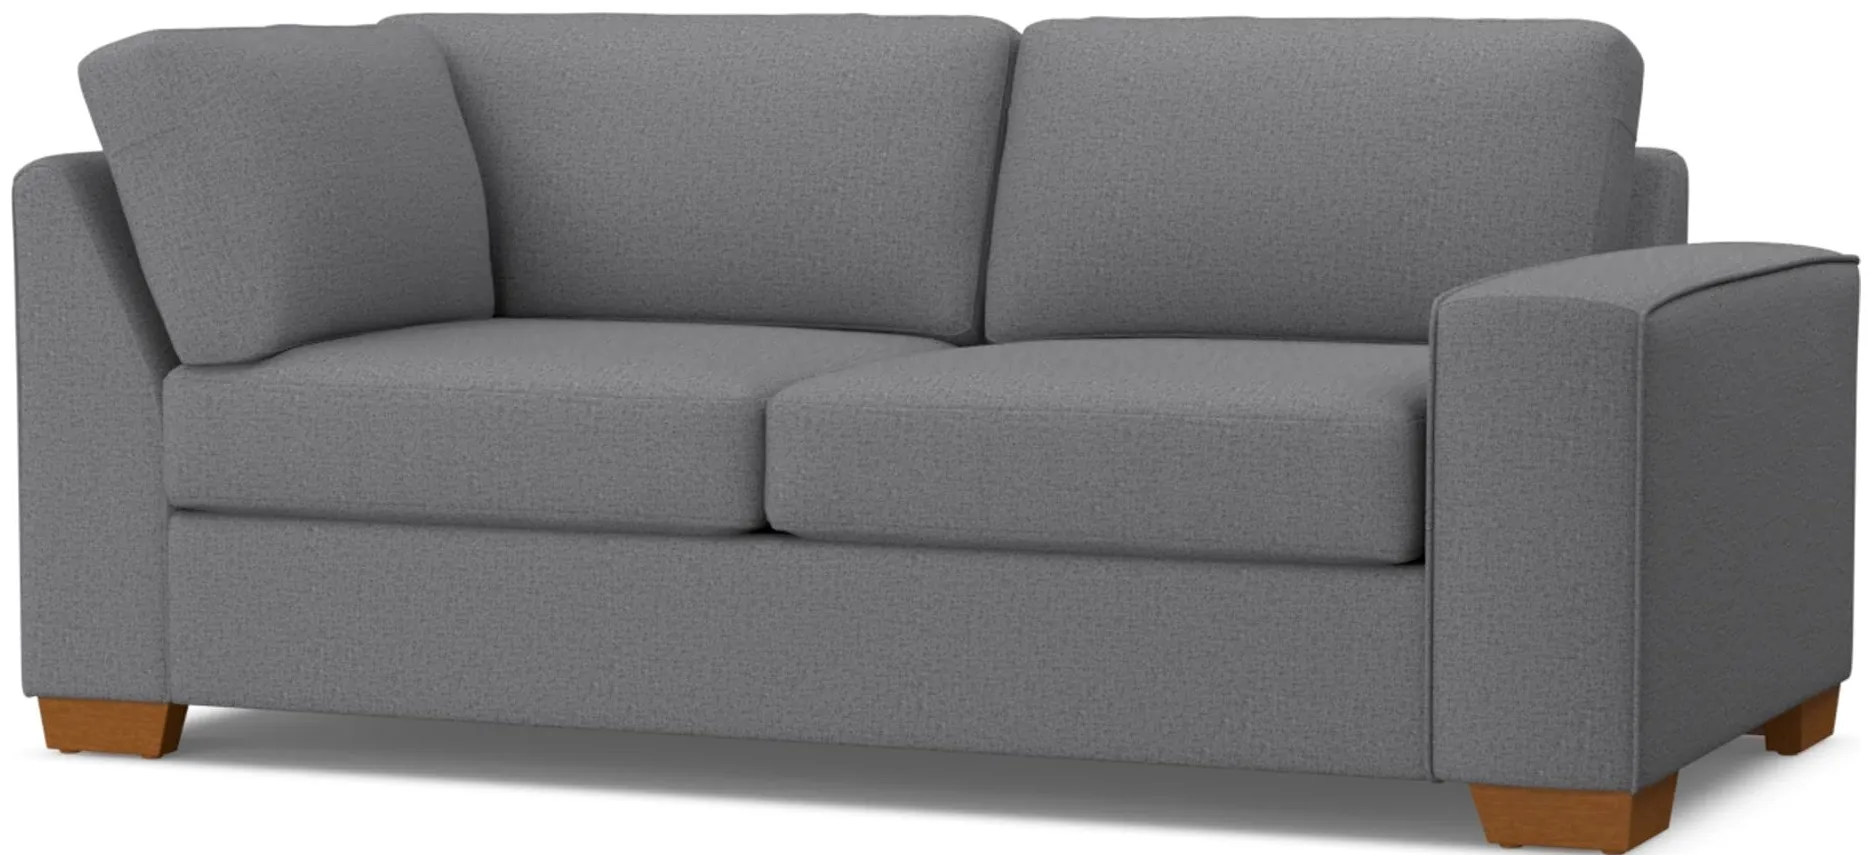 Melrose Right Arm Corner Apt Size Sofa